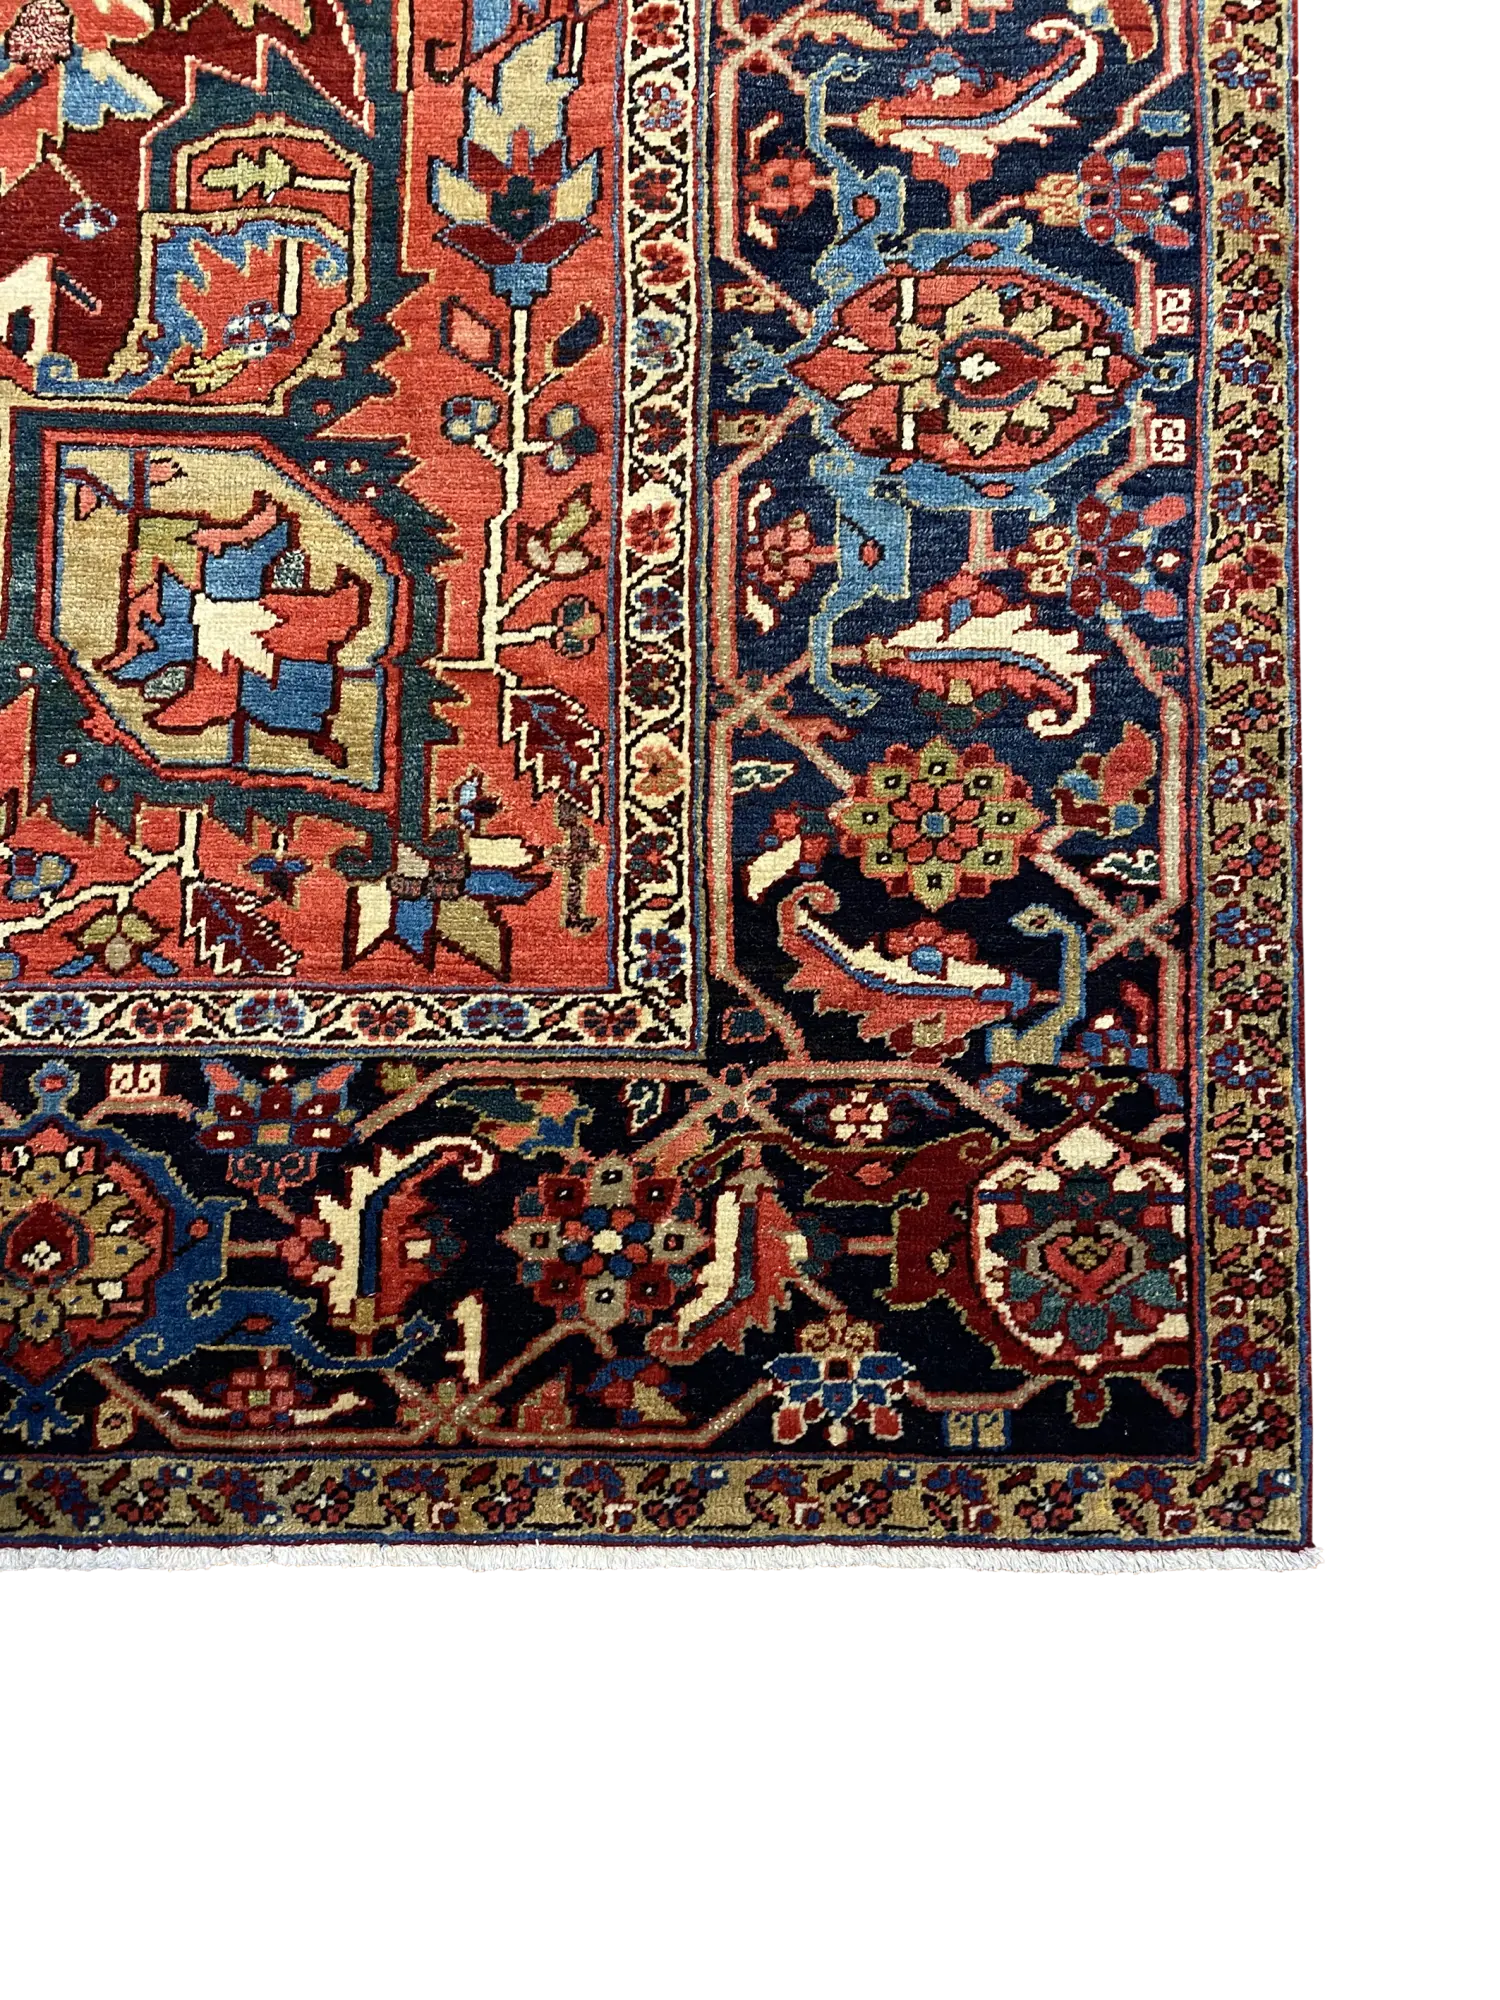 Antique Persian Heriz 9' 10" x 12' 10" Handmade Area Rug - Shabahang Royal Carpet